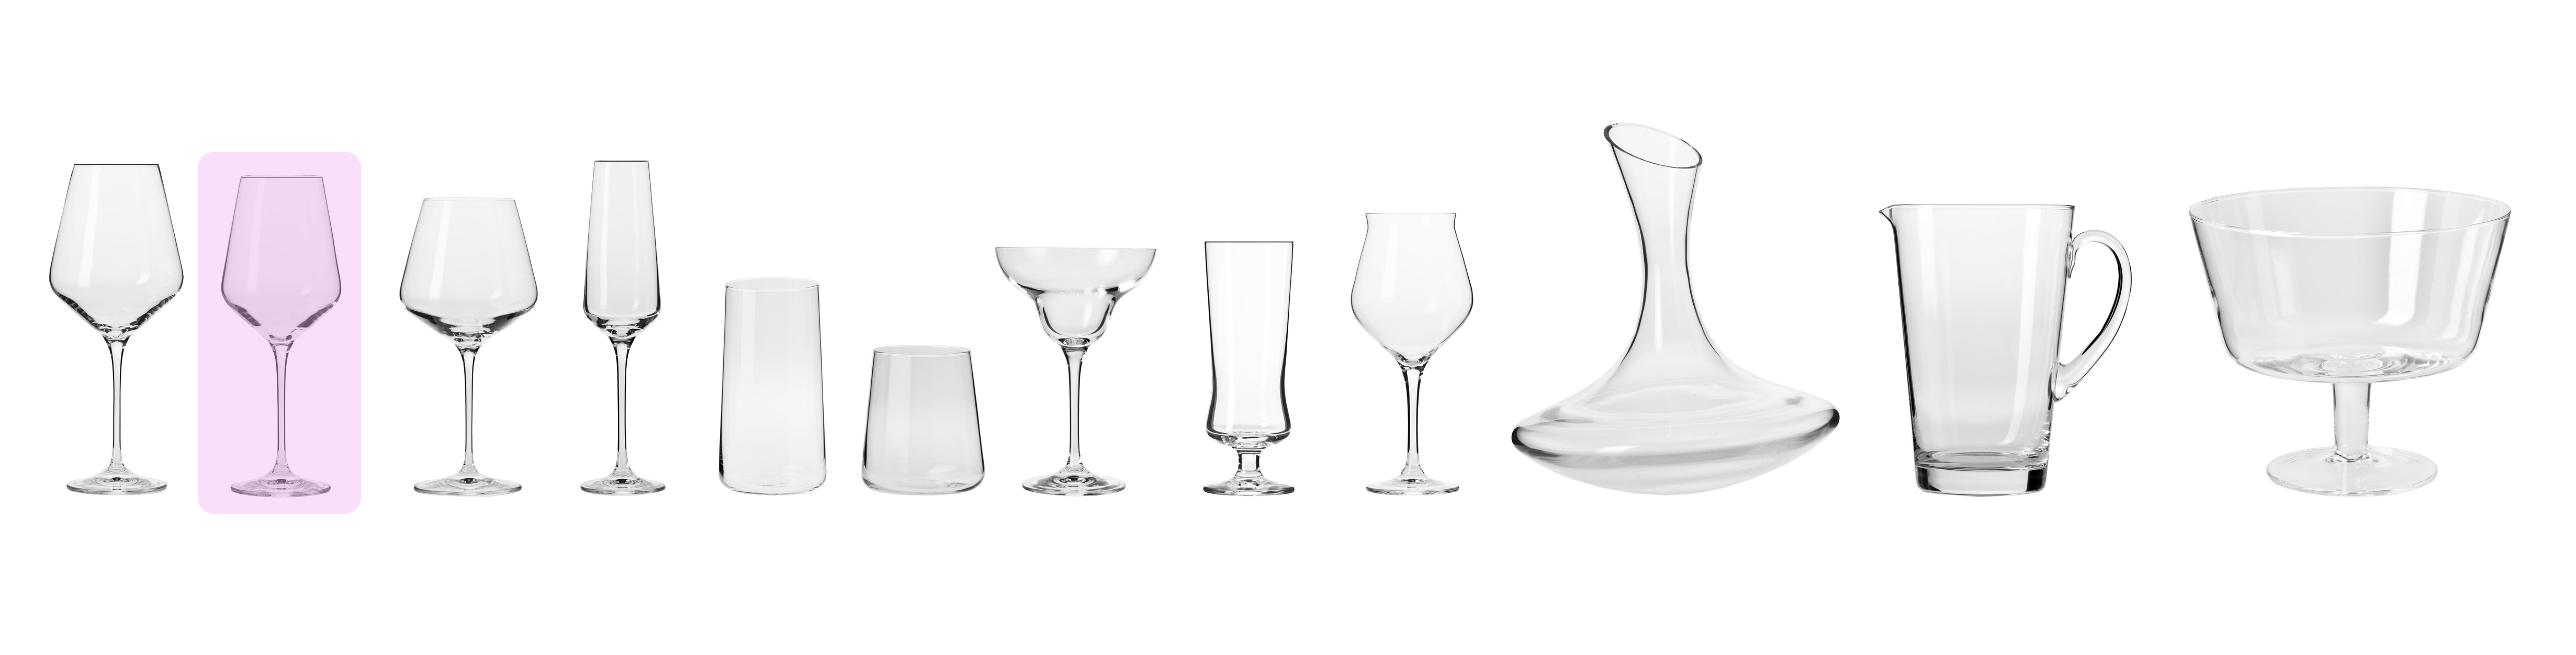 AVANT-GARDE collection white wine glass